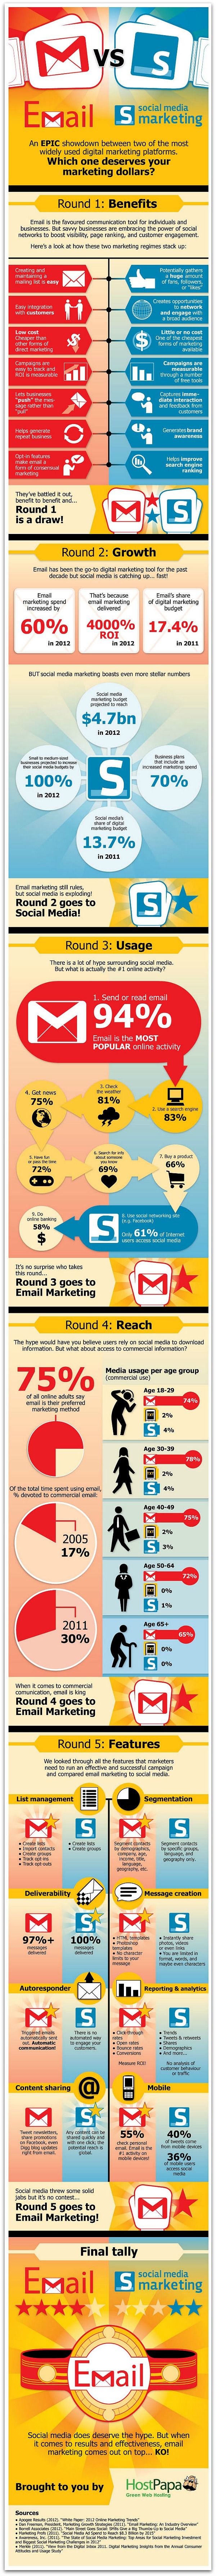 Email Marketing vs Social Marketing